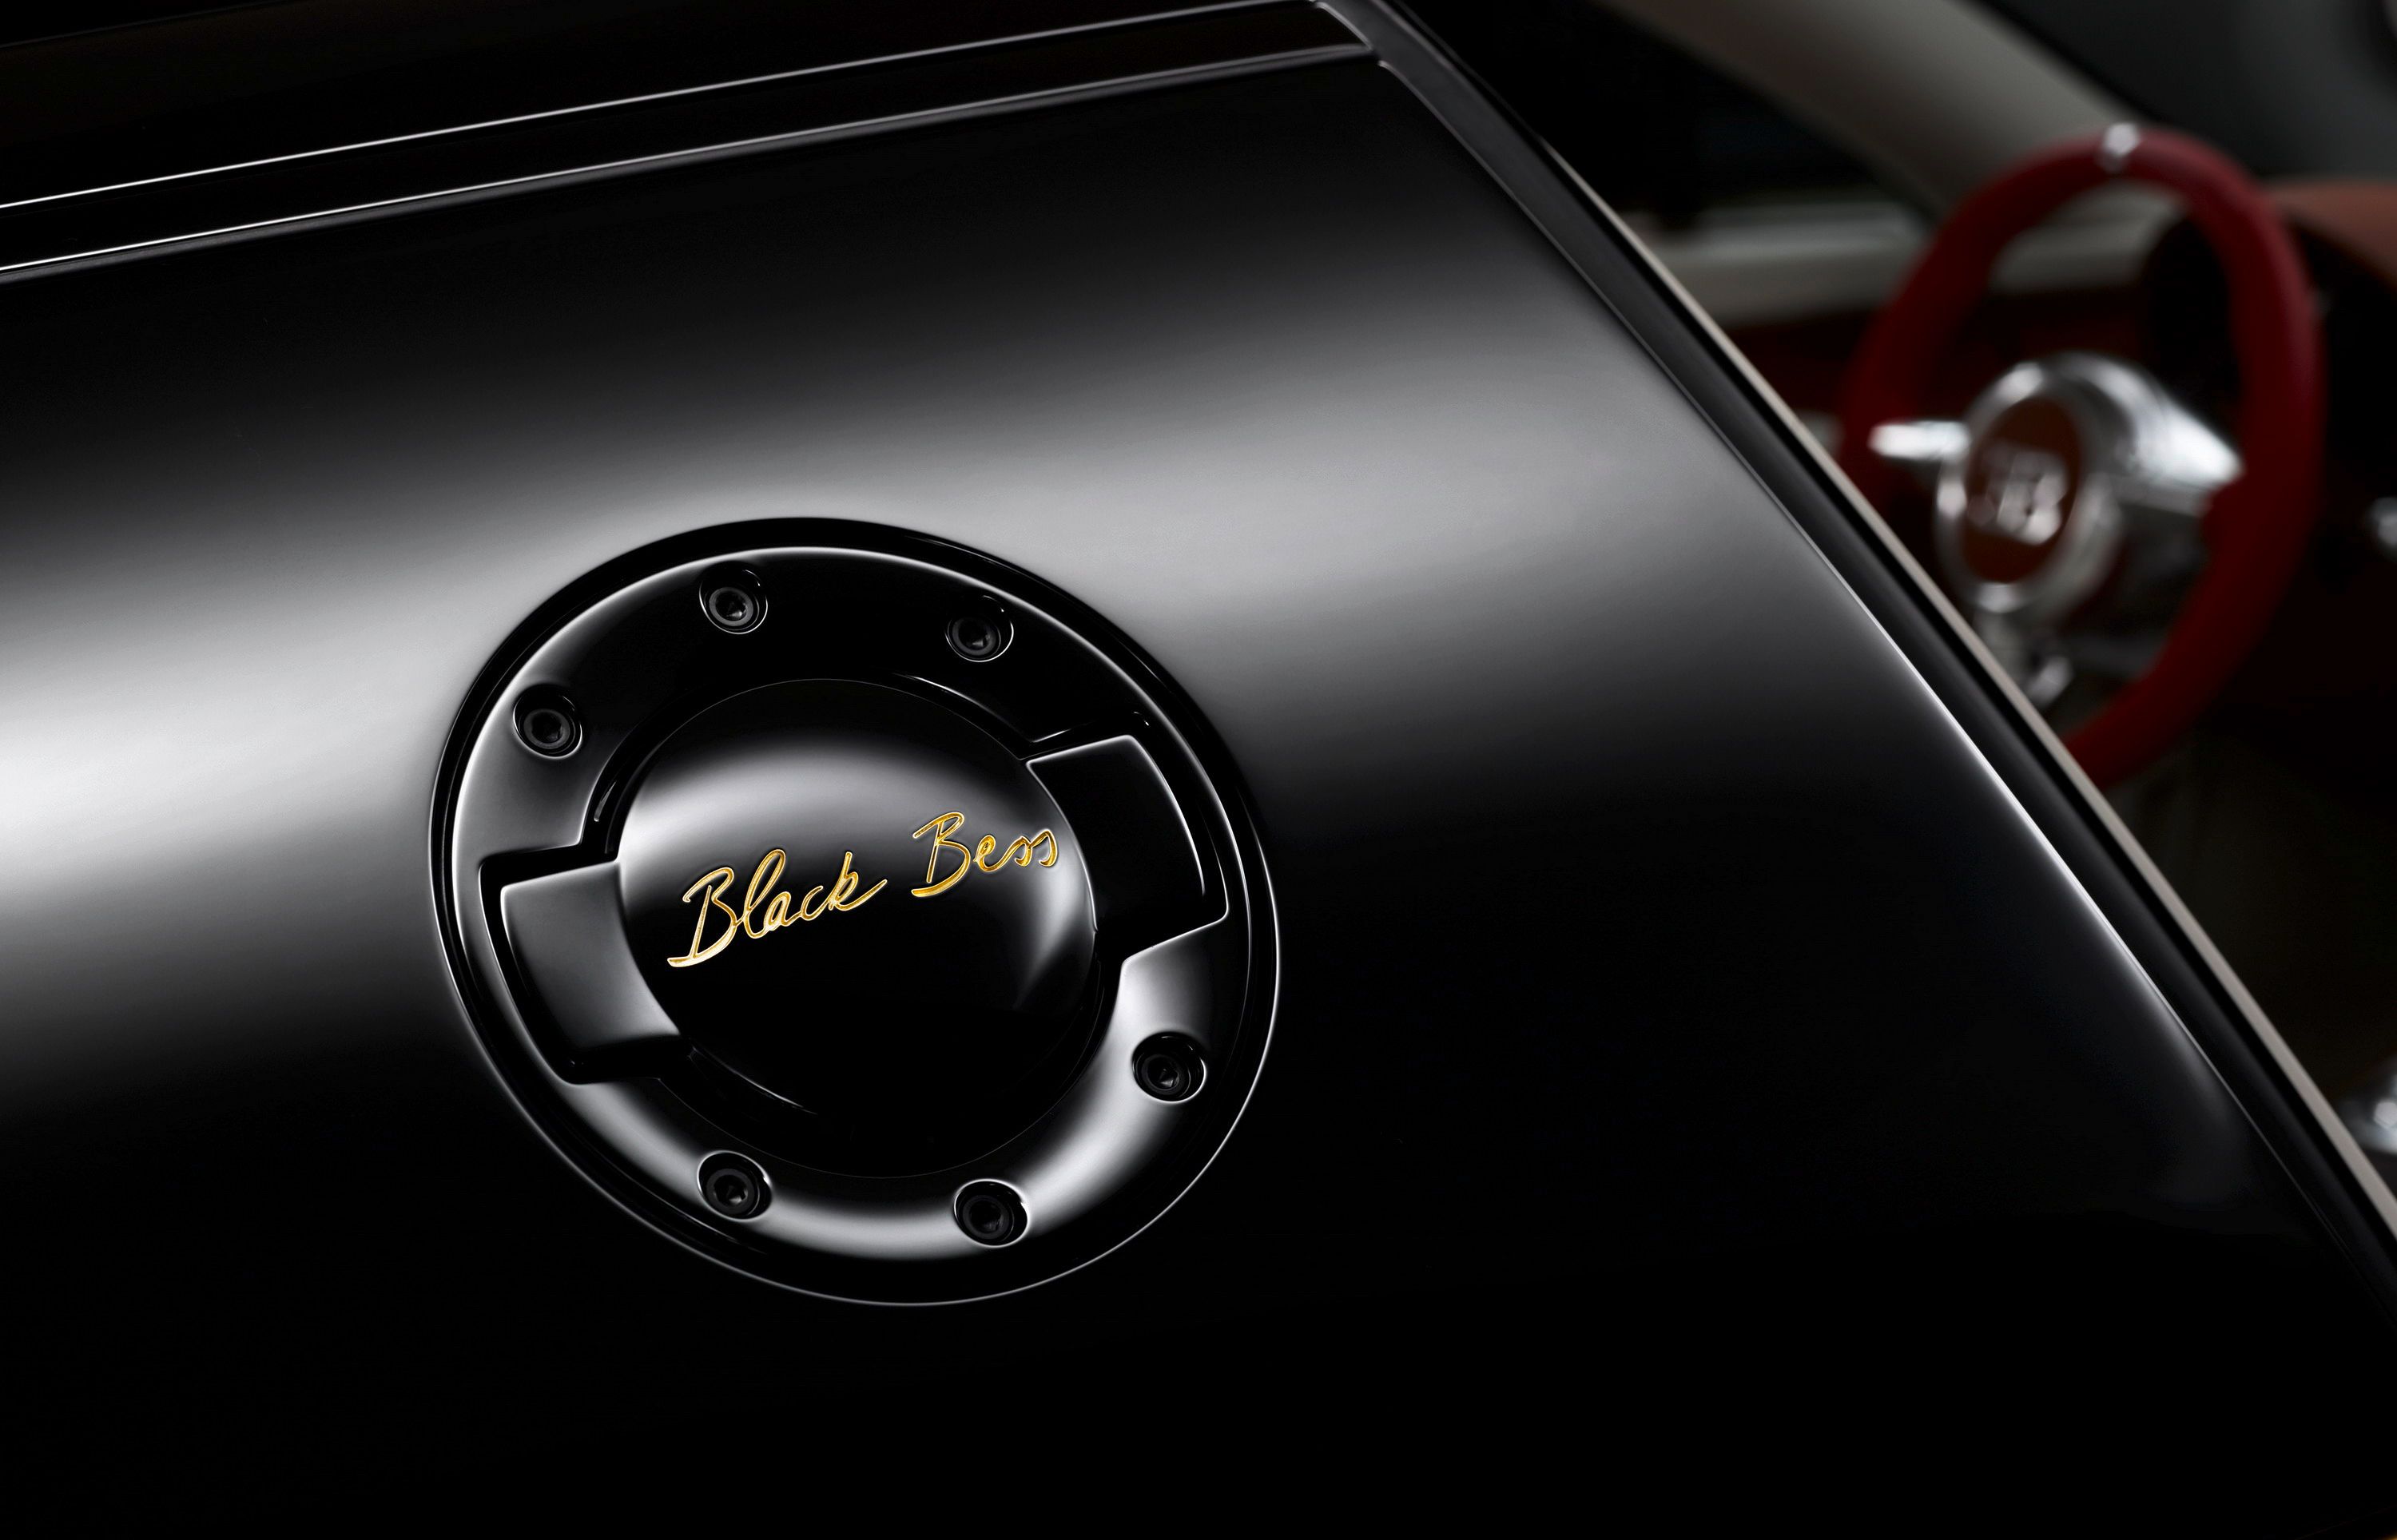 2014 Bugatti Veyron Grand Sport Vitesse Black Bess